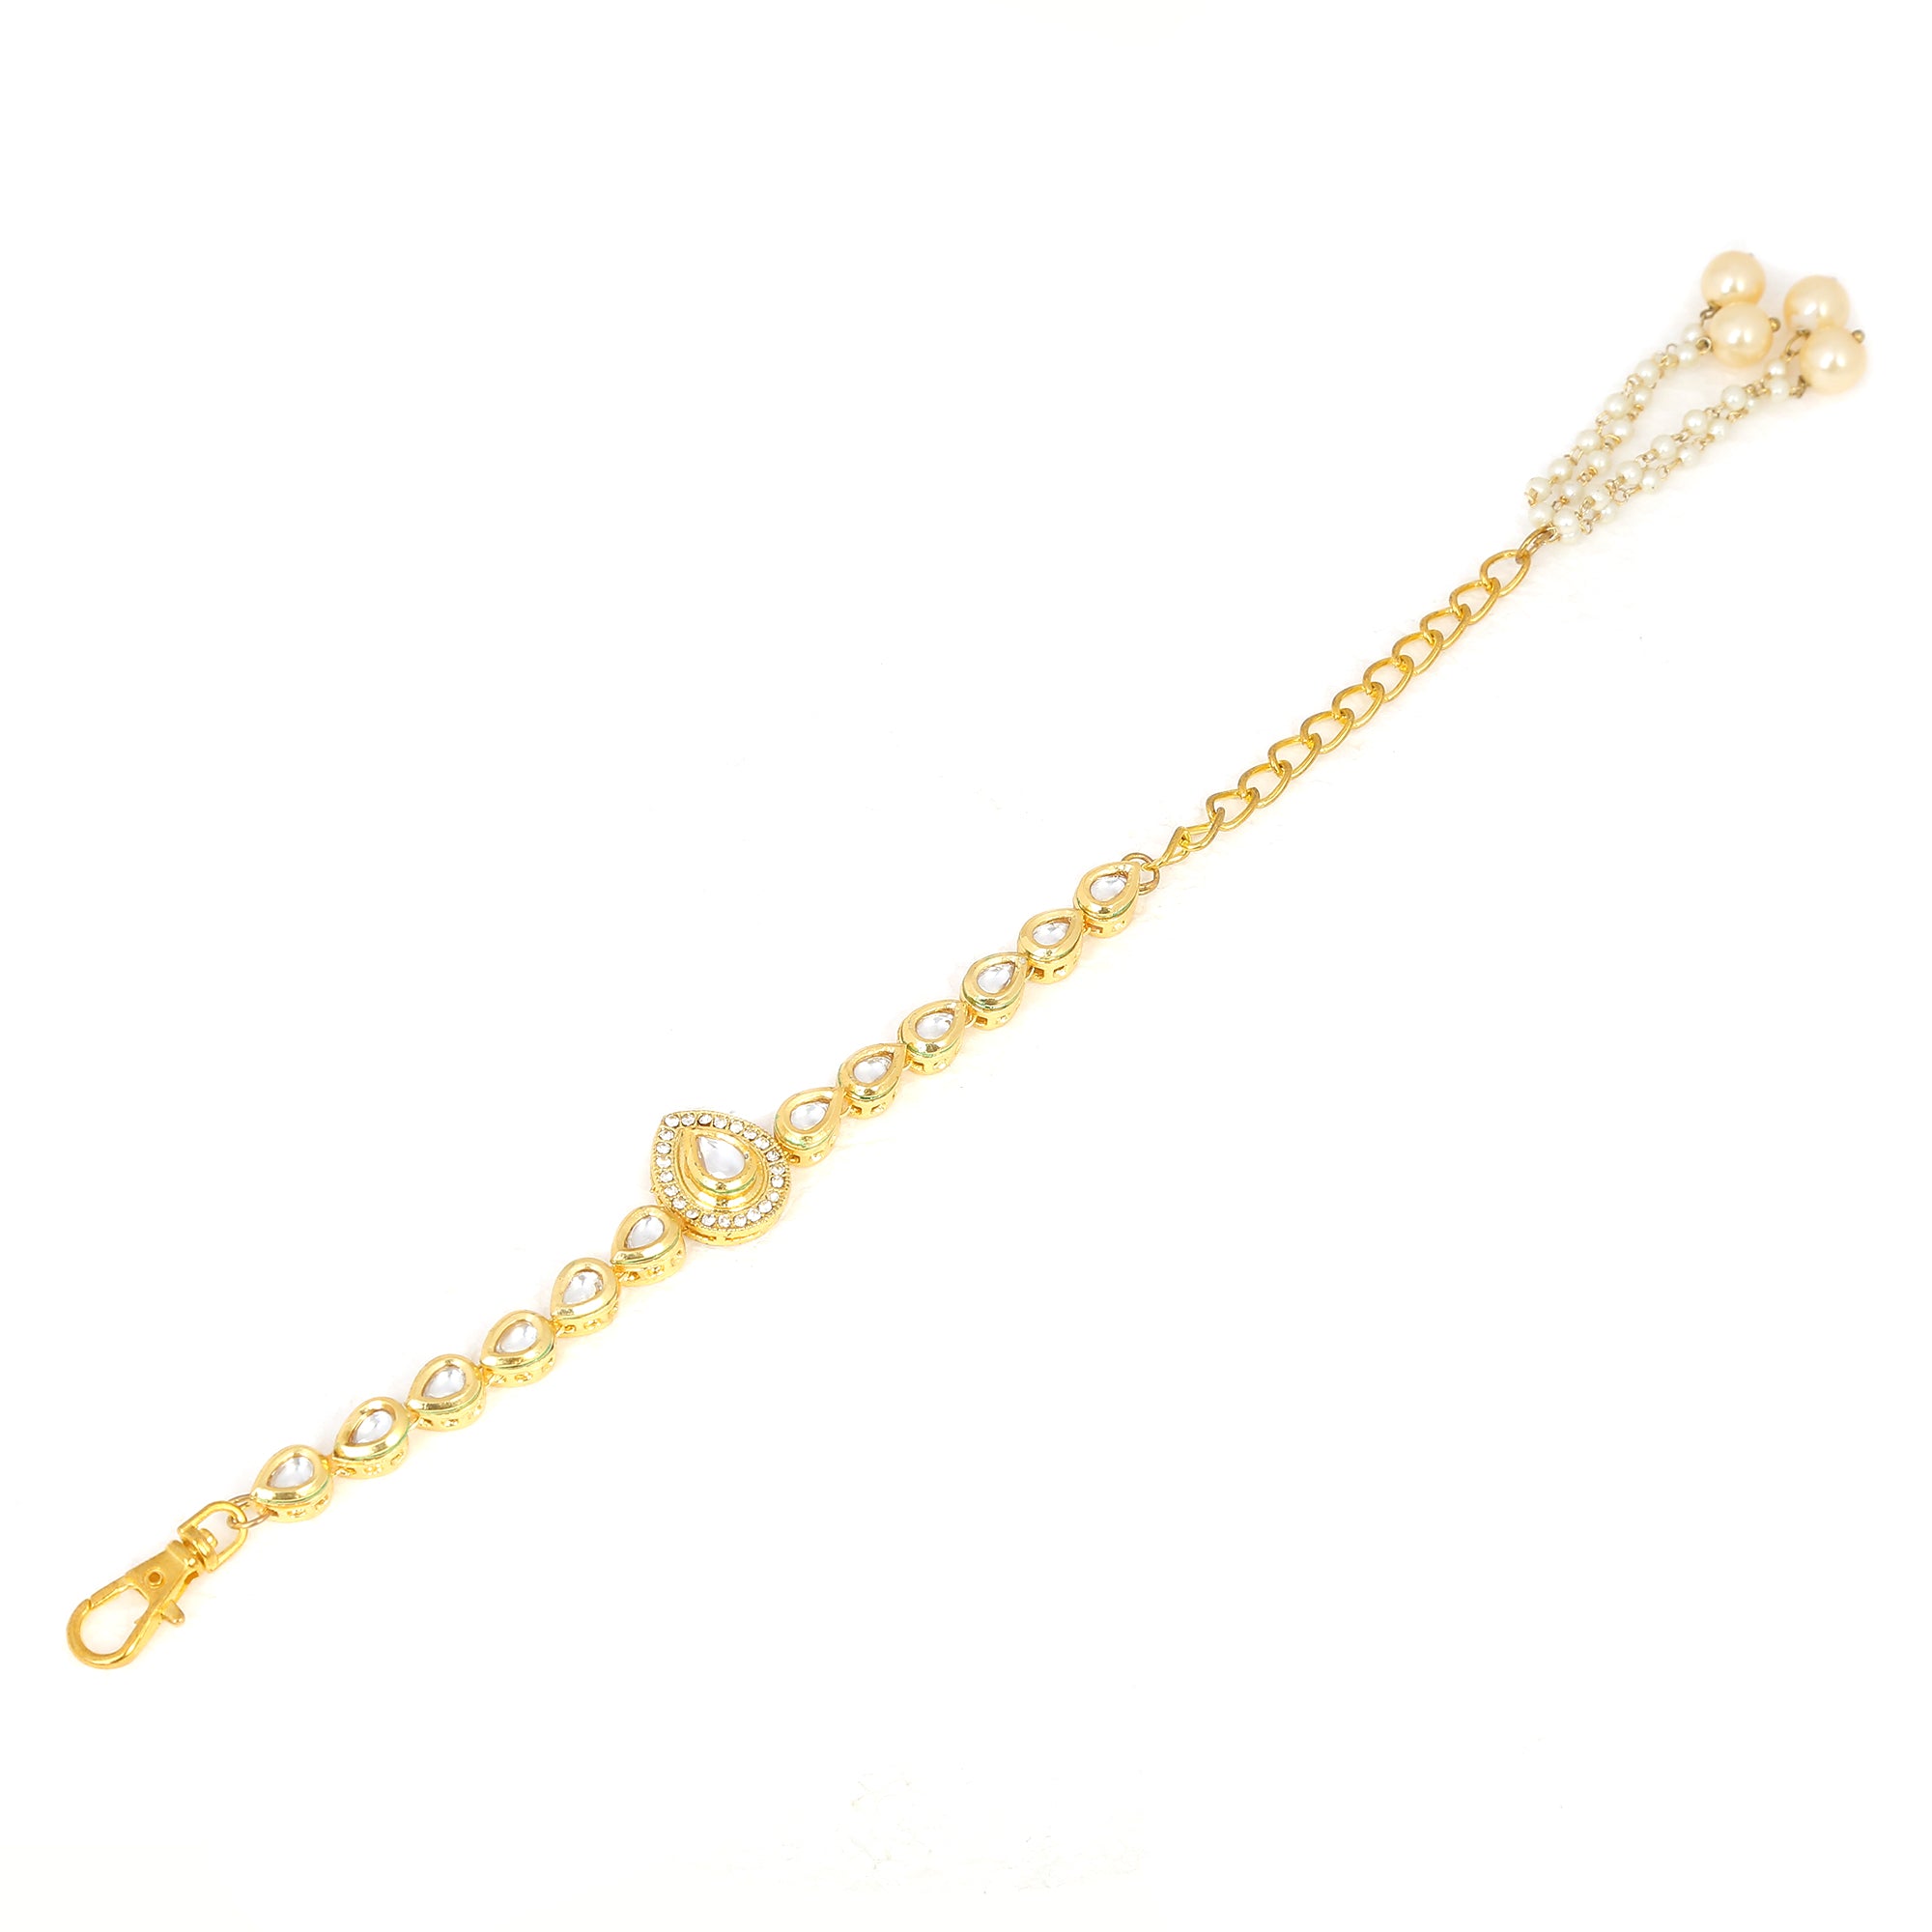 Women's Handcrafted Gold Kundan Bracelet With Pearls - Femizen